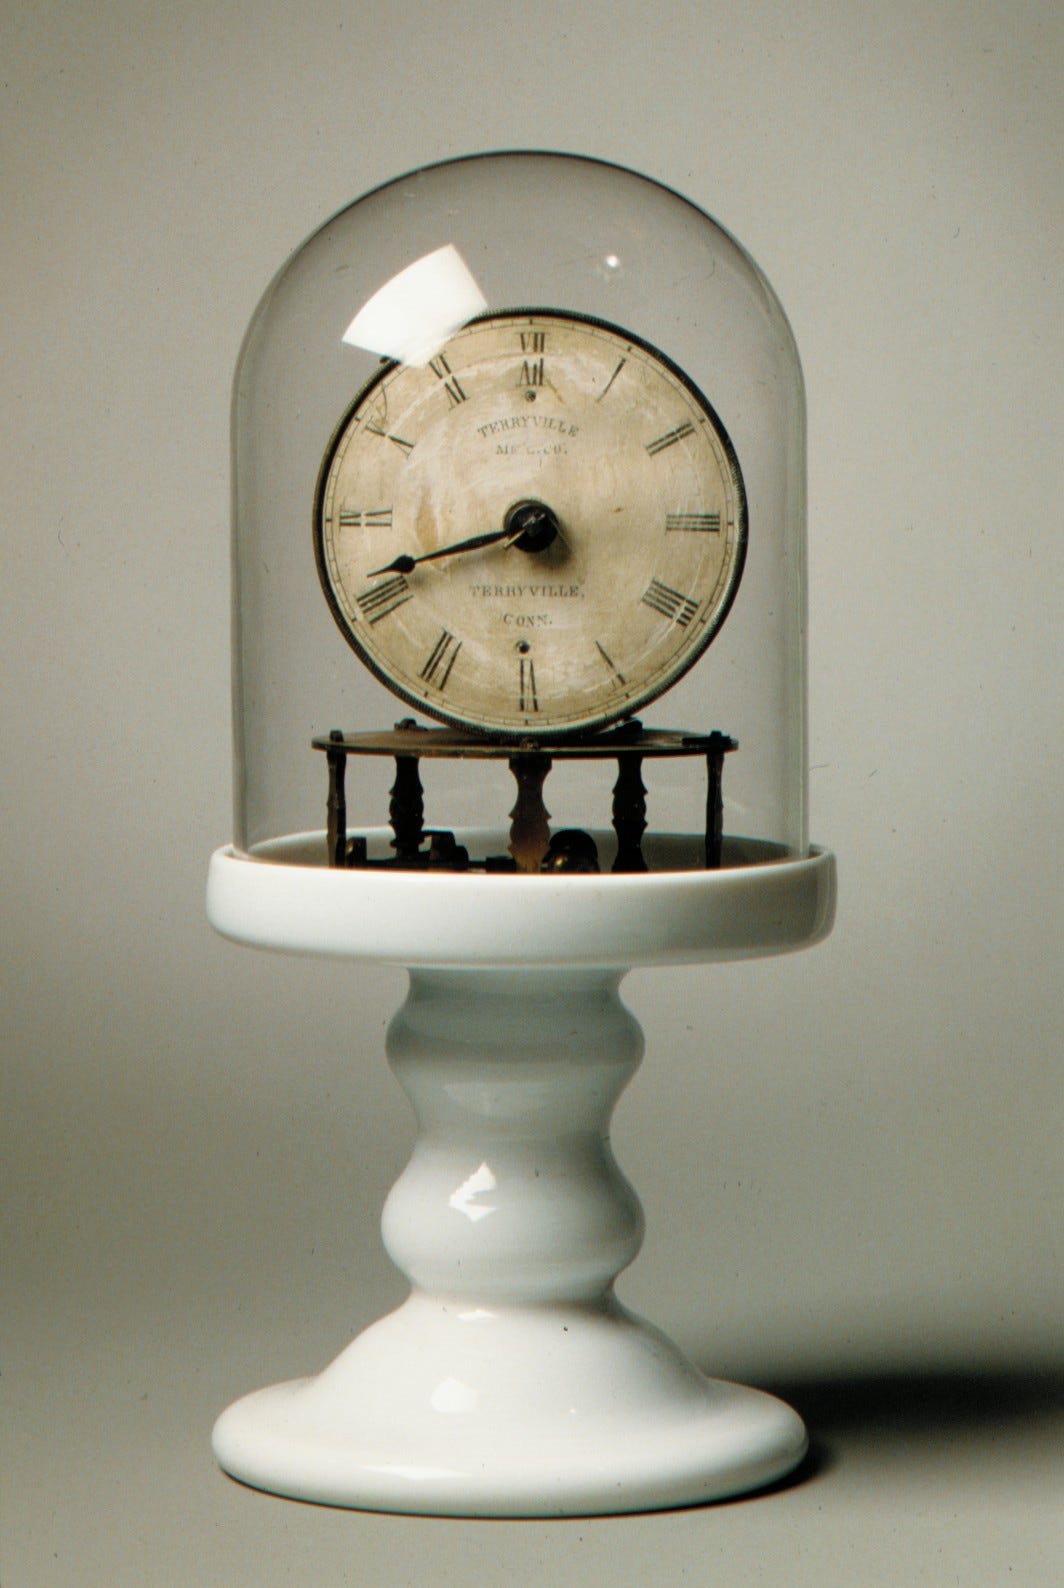 clock on ceramic pedestal with glass cloche